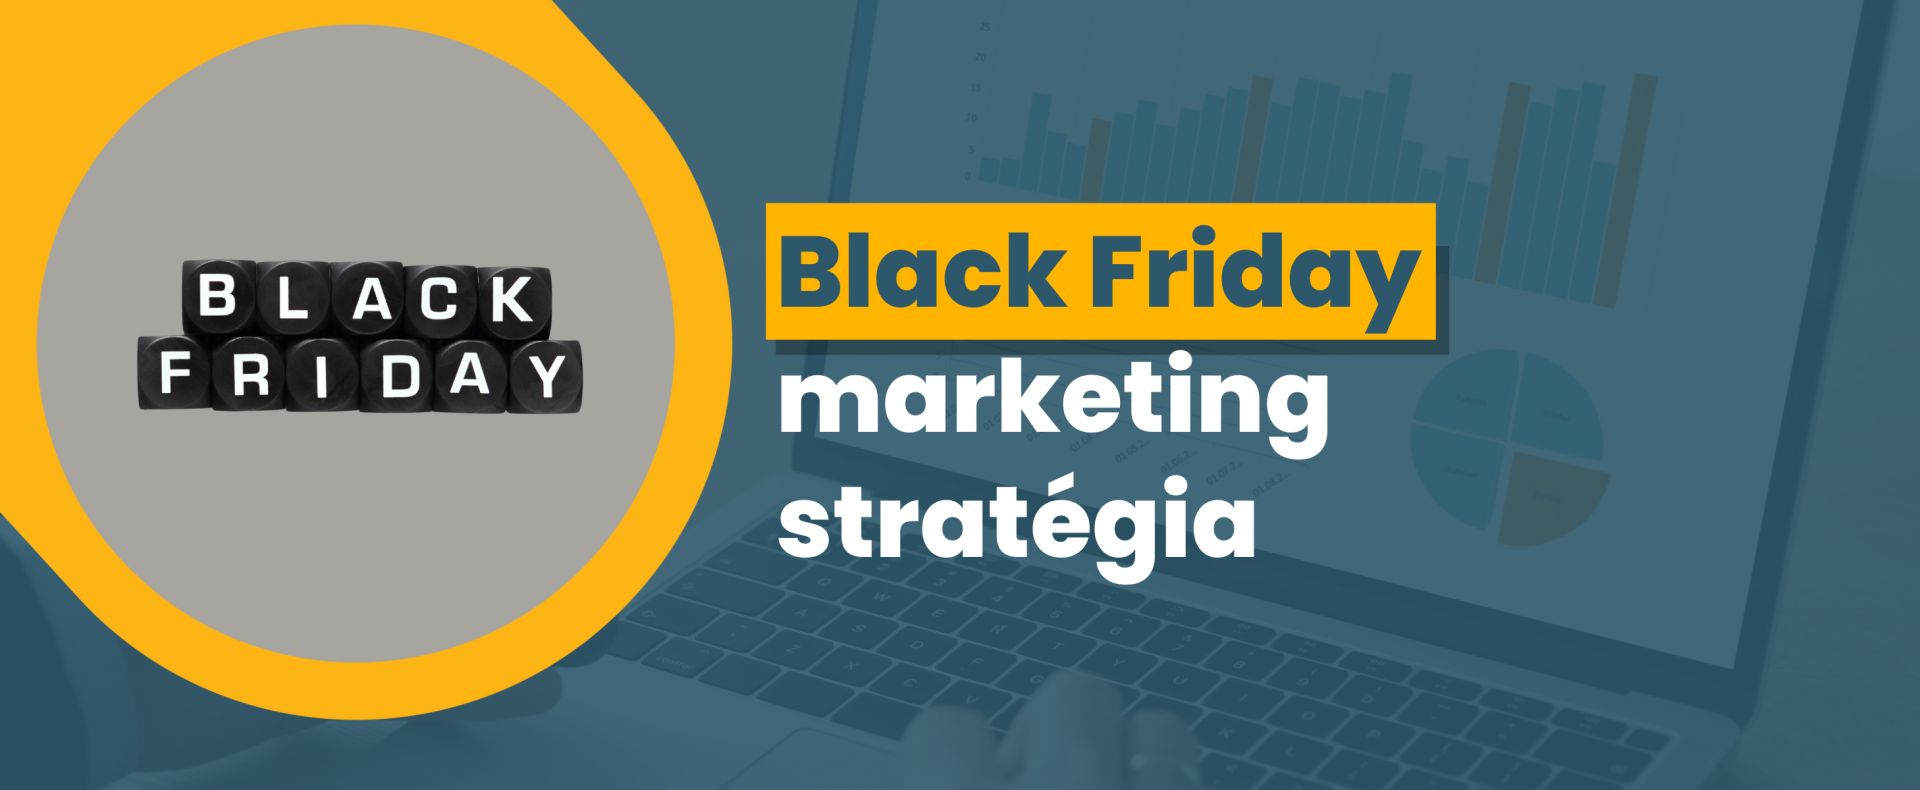 Black Friday marketing stratégia